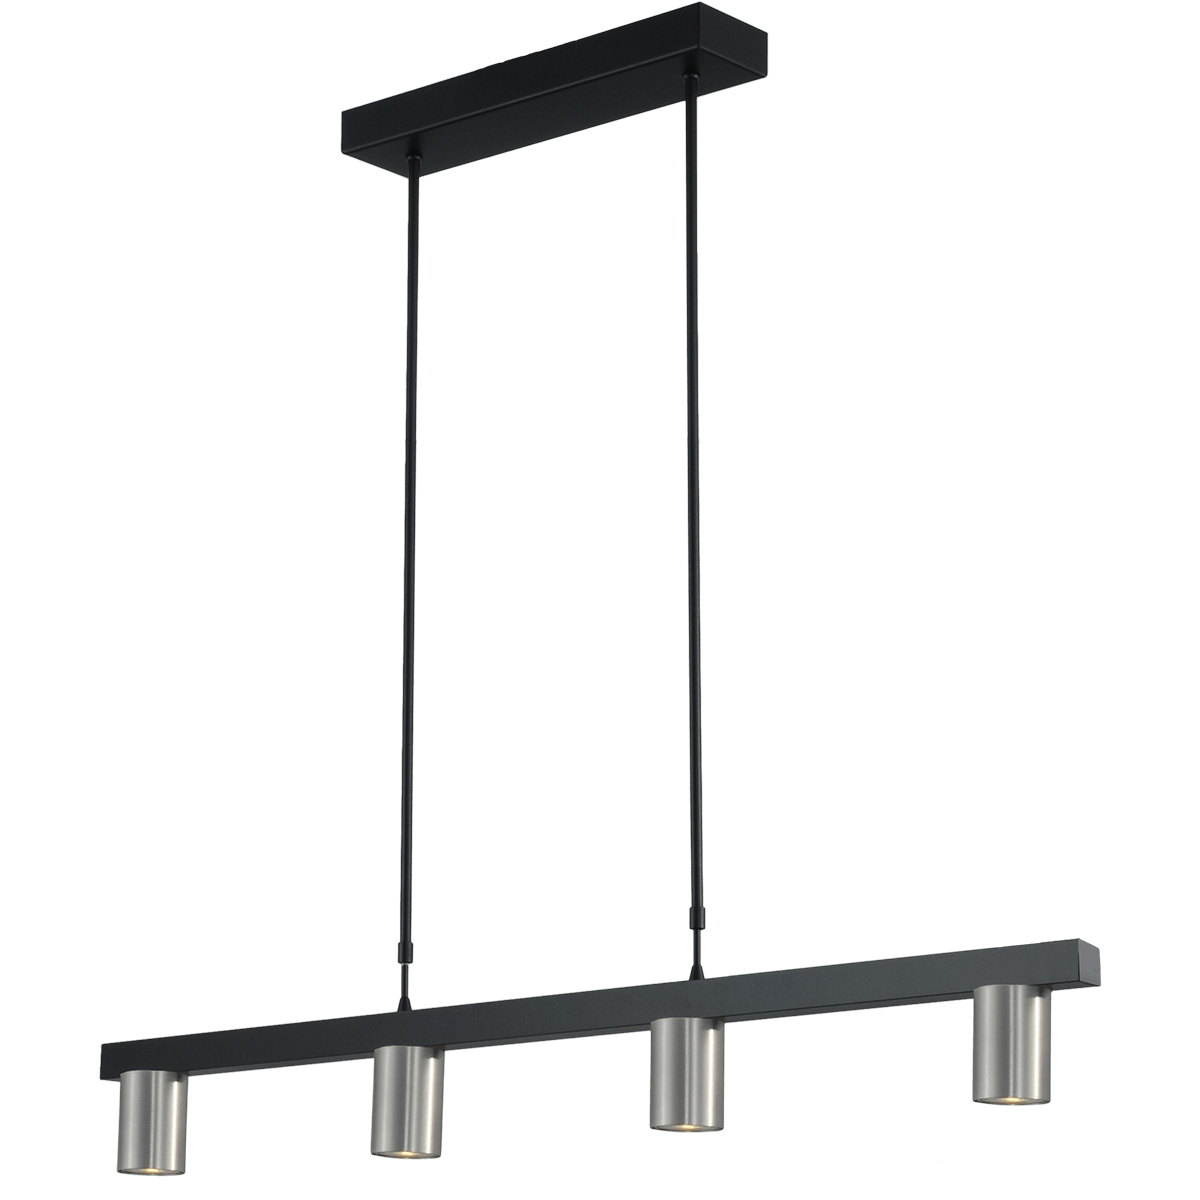 Hanglamp Bounce zwart/mat nikkel 4-lichts - breedte 100cm - exclusief 4x GU10 - MASTERLIGHT